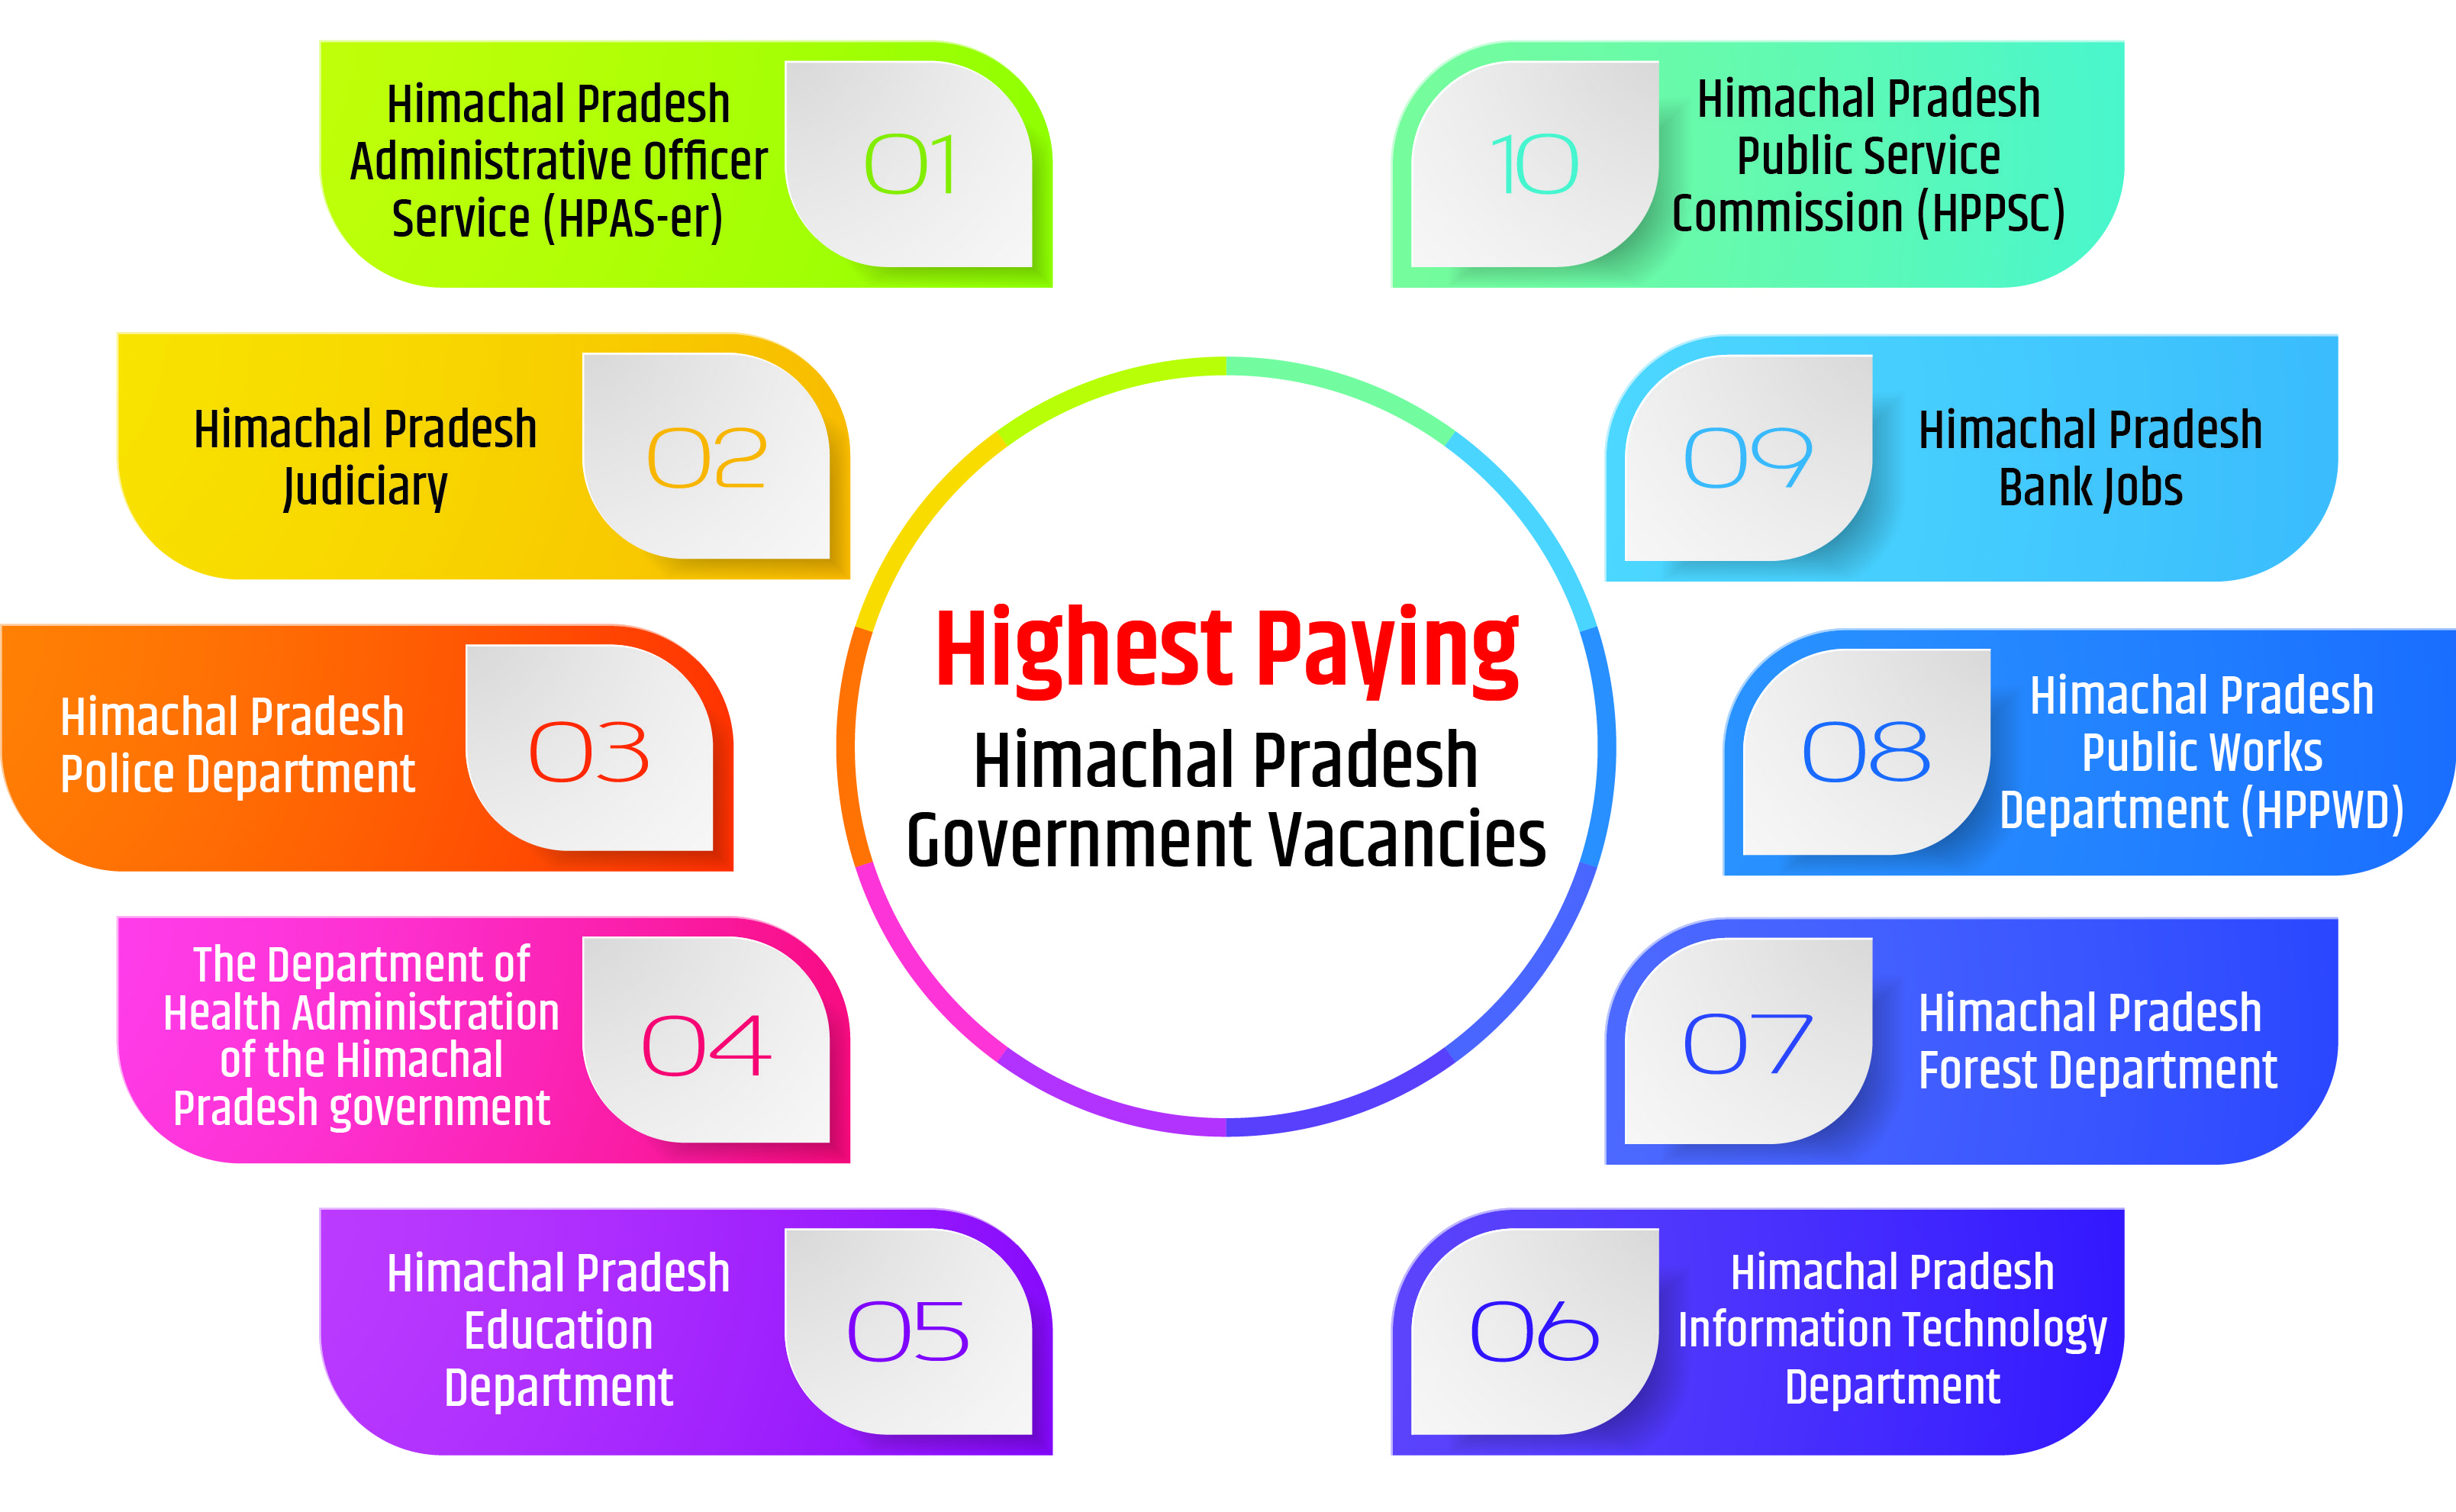 Highest Paying Himachal Pradesh Government Vacancies